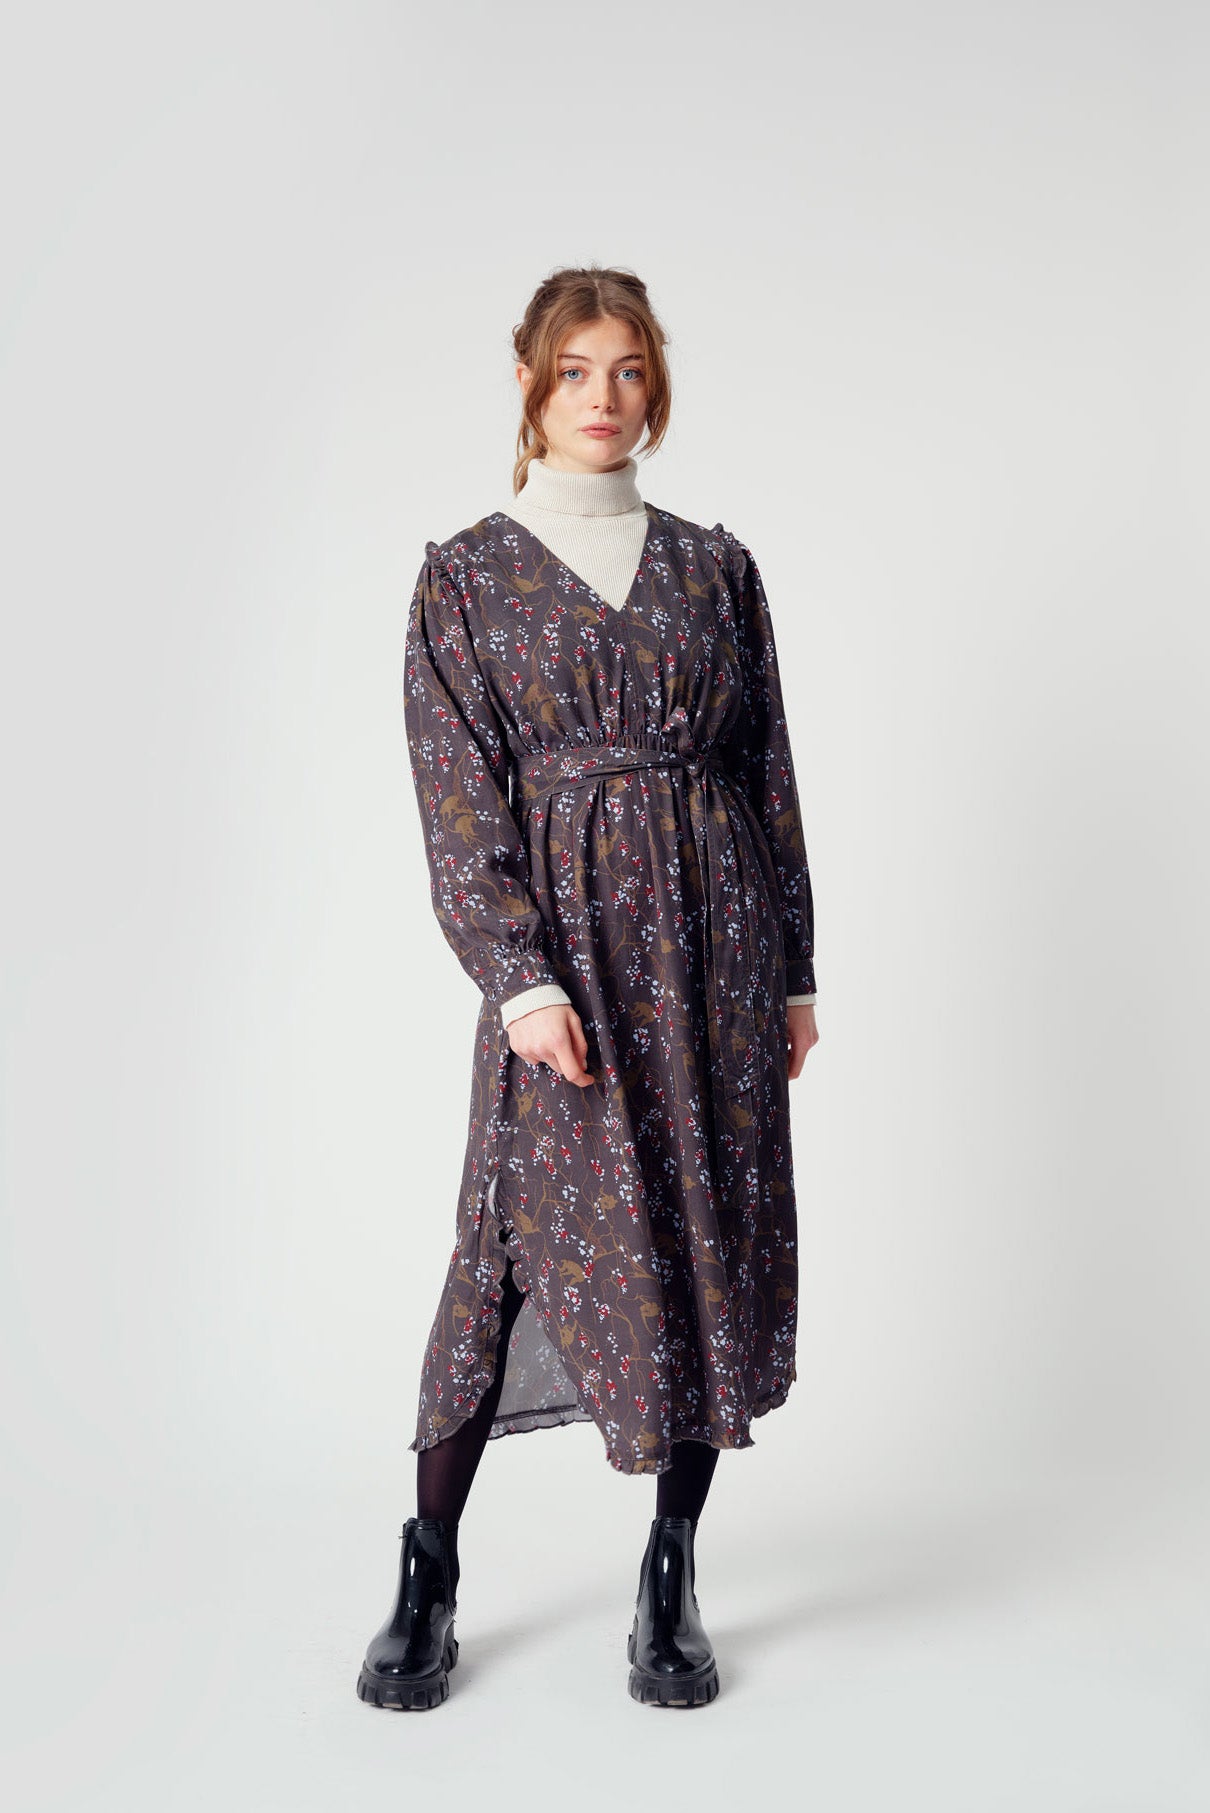 ALINA Womens Tencel Winter Jungle Ivy Dress, Size 5 / UK 16 / EUR 44